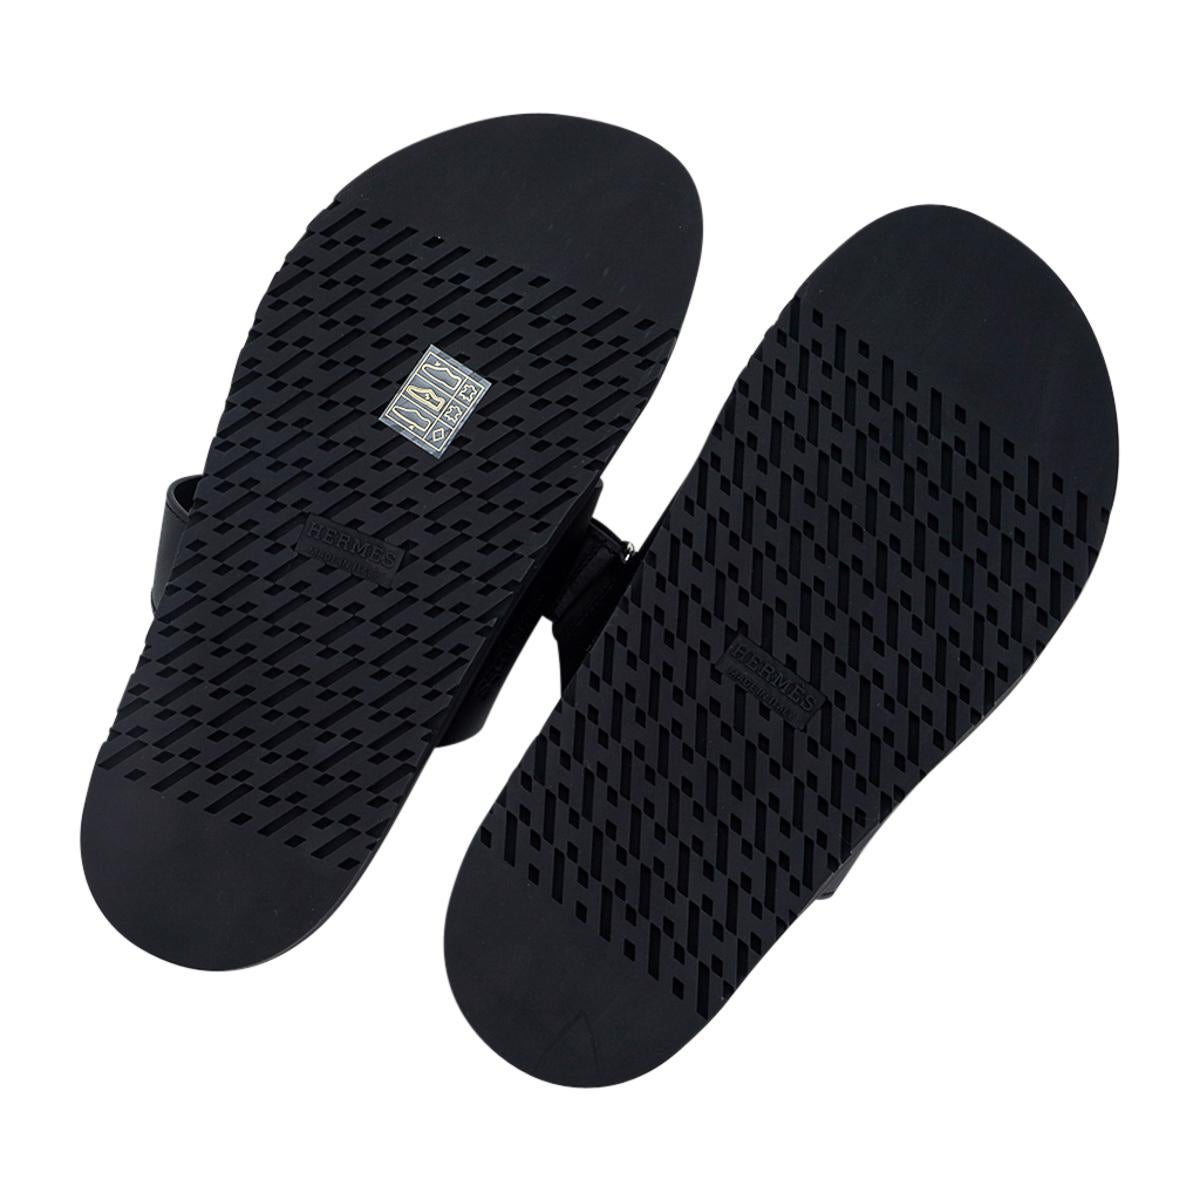 Hermes Chypre Black Calfskin Sandal 40.5 / 10.5 1